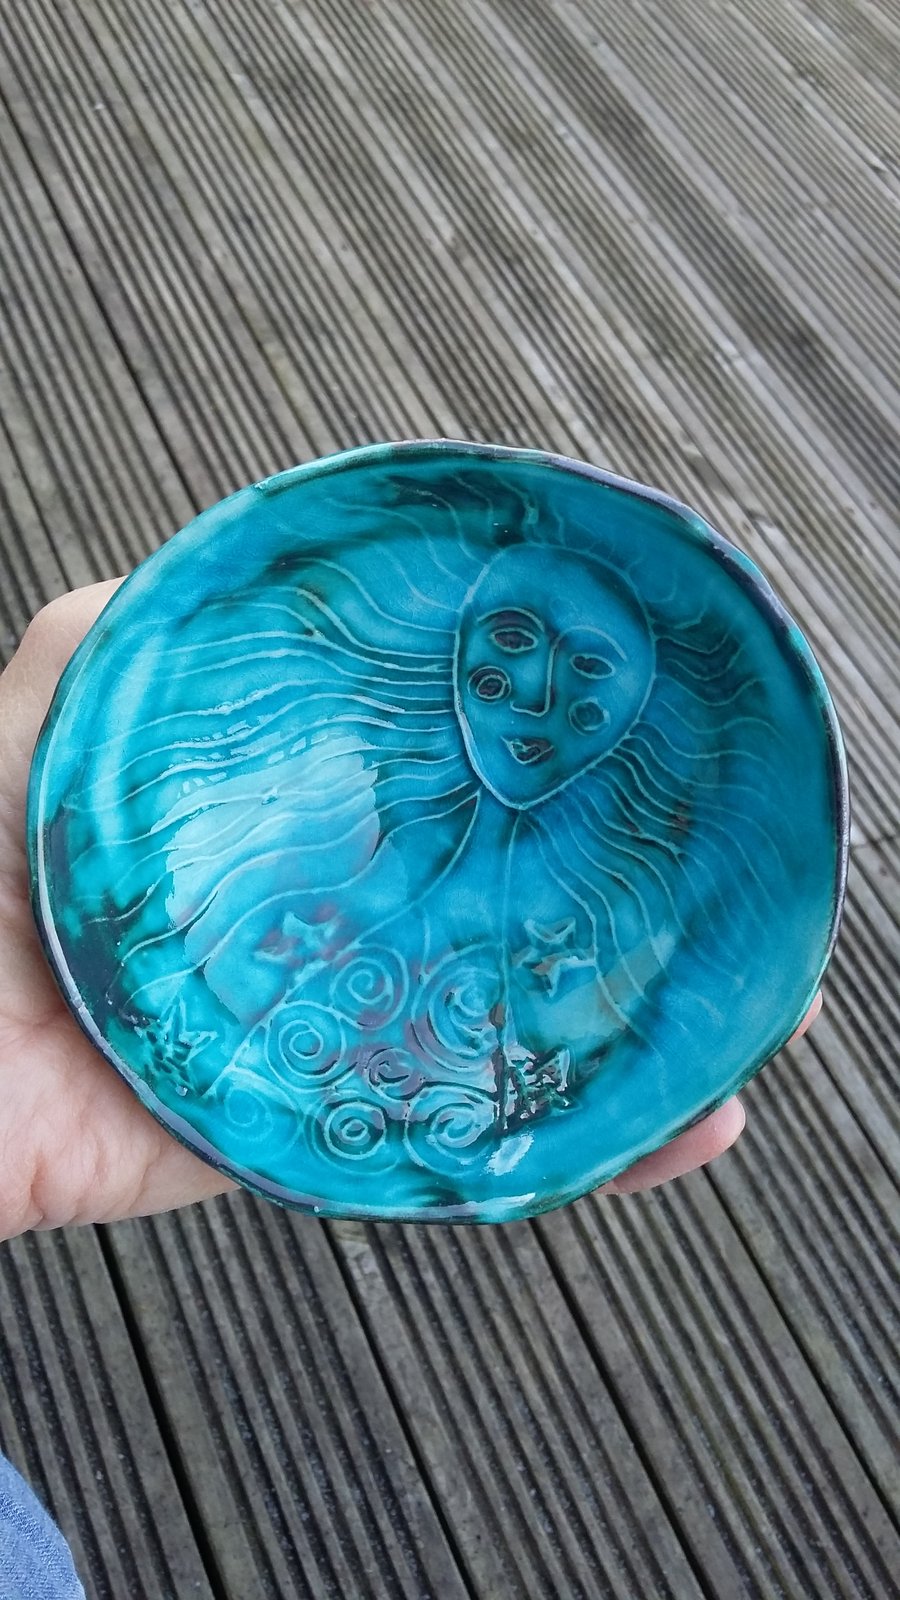 Bowl with mermaid motif